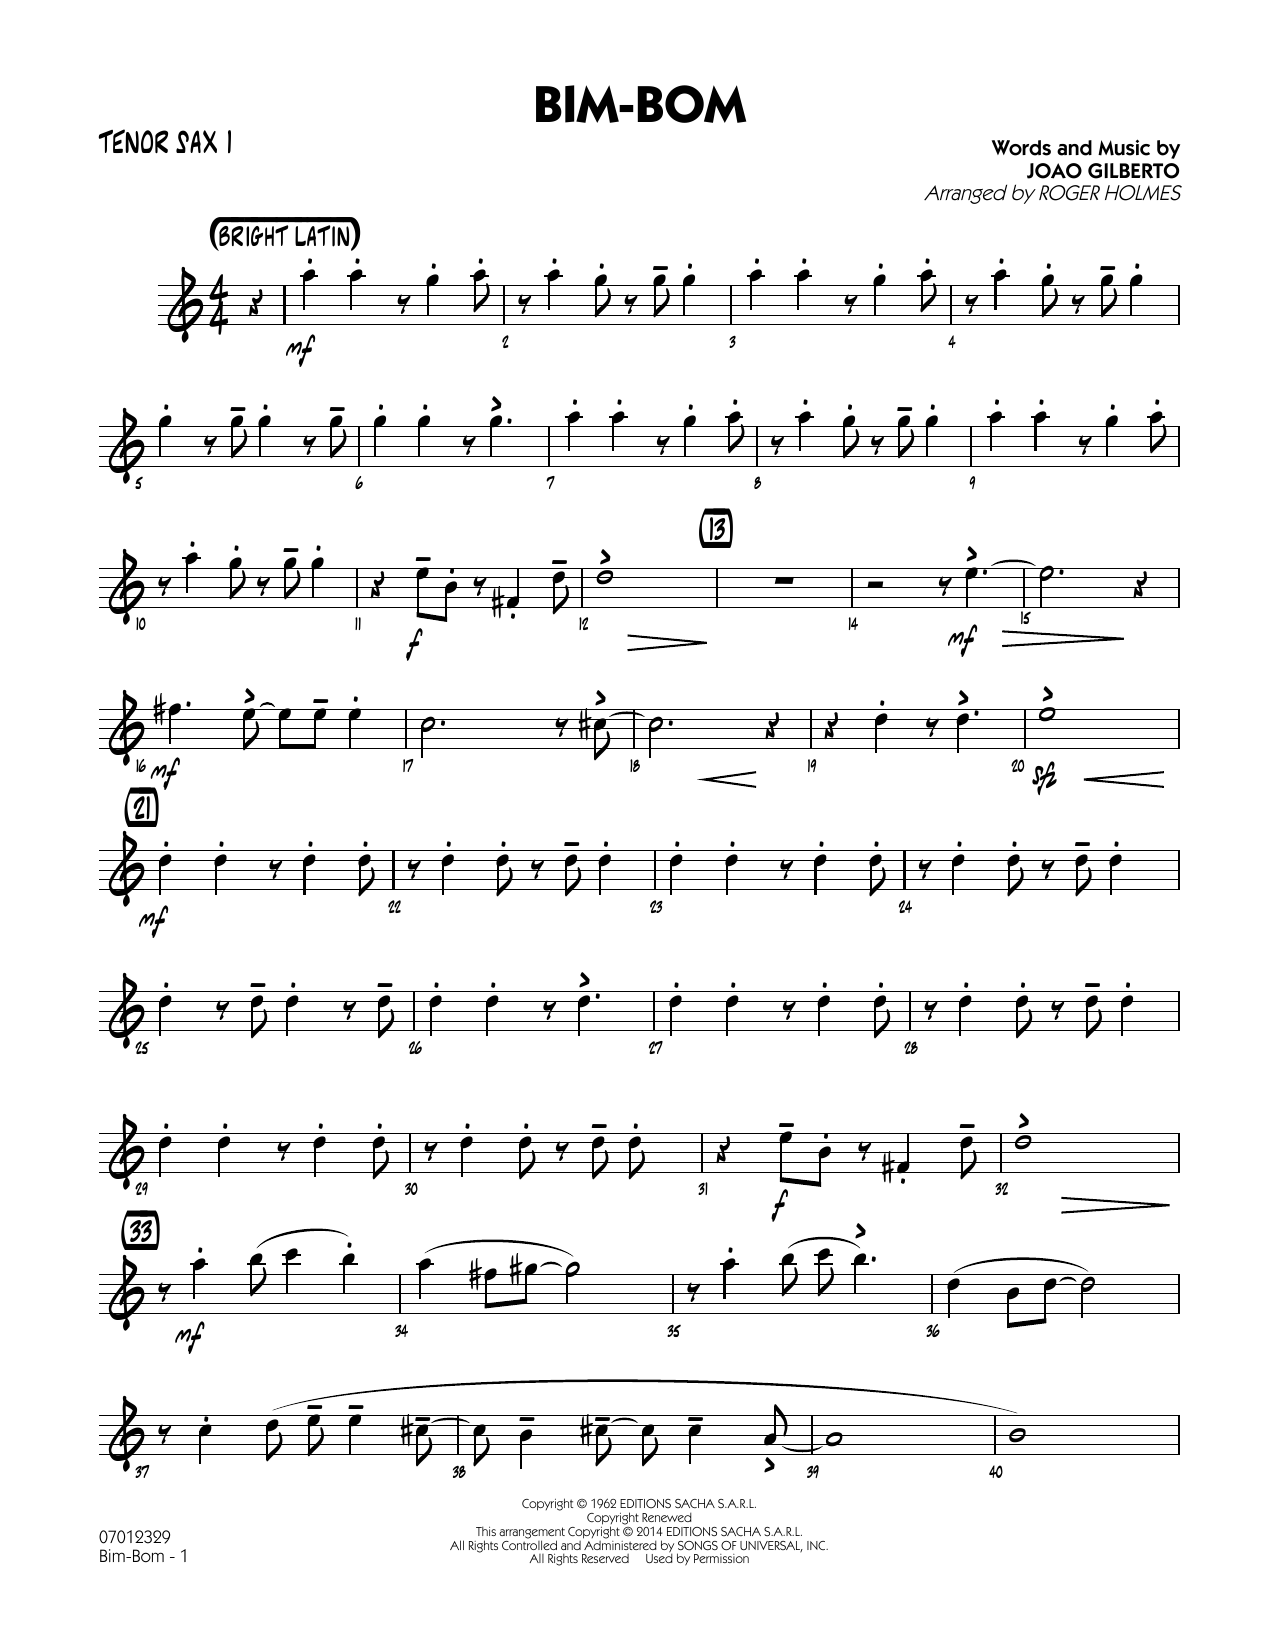 Roger Holmes Bim-Bom - Tenor Sax 1 sheet music notes and chords. Download Printable PDF.